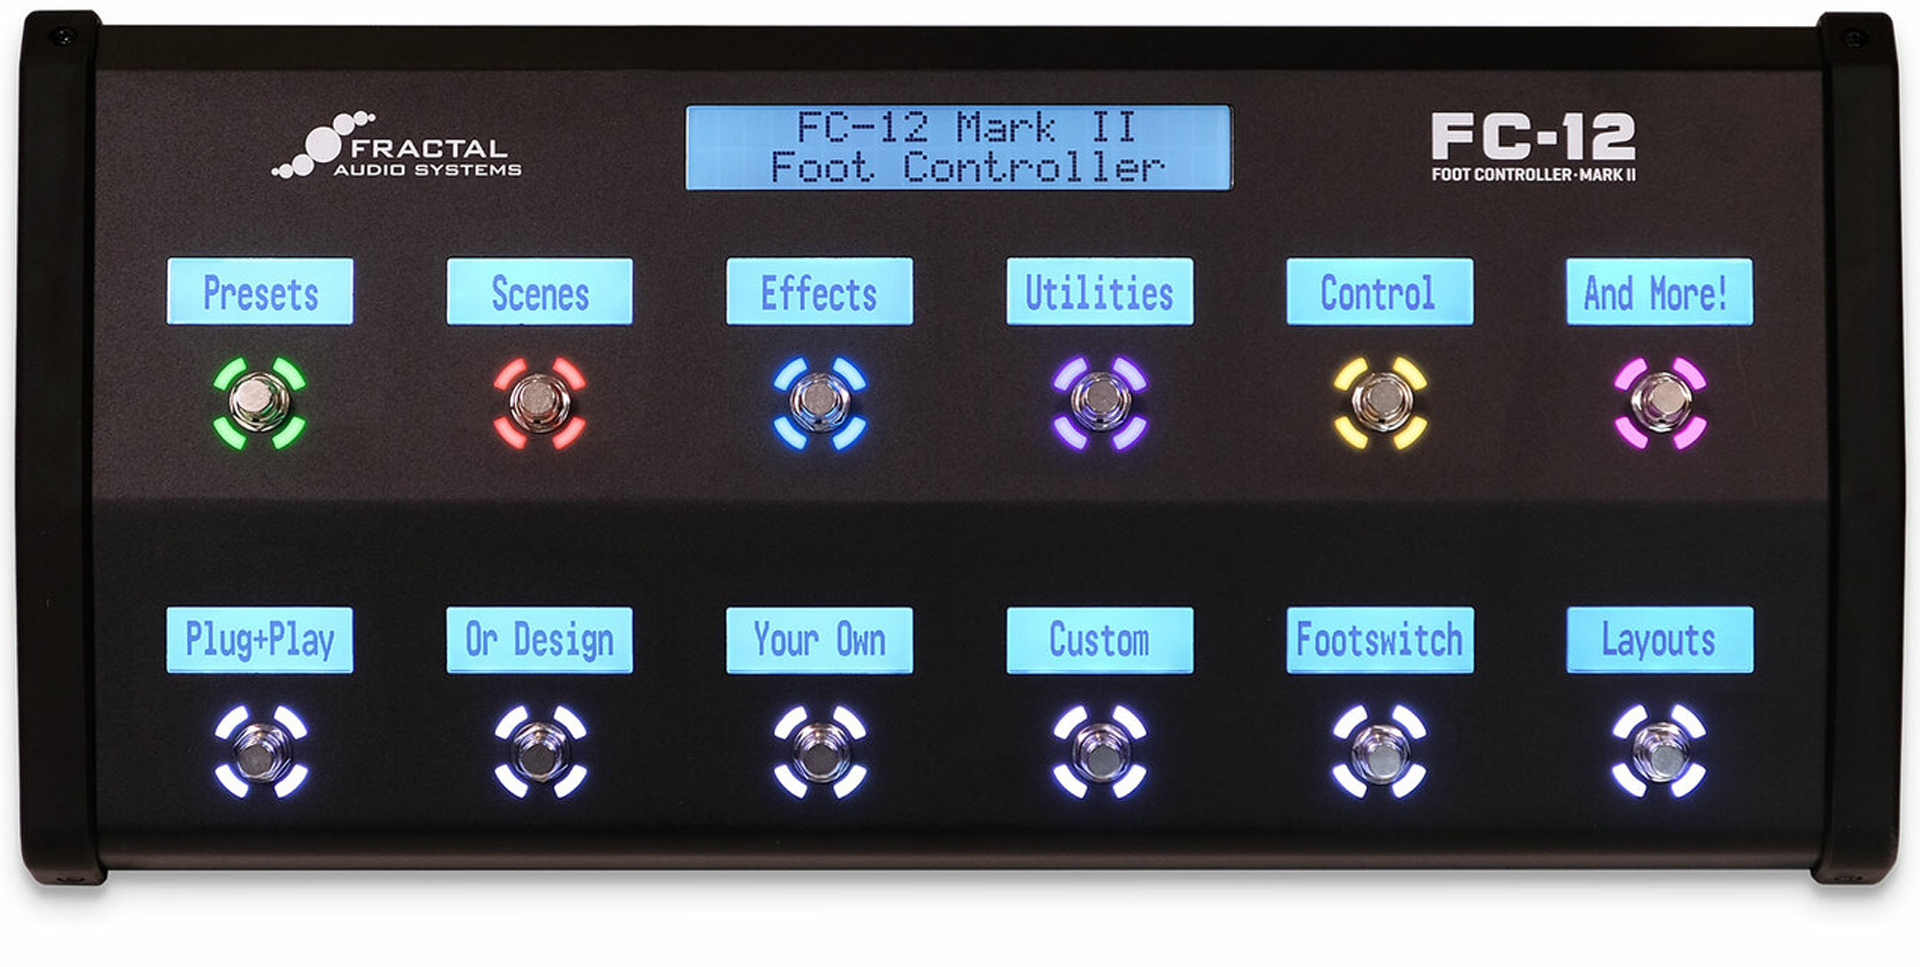 FC-12 MK II Foot Controller